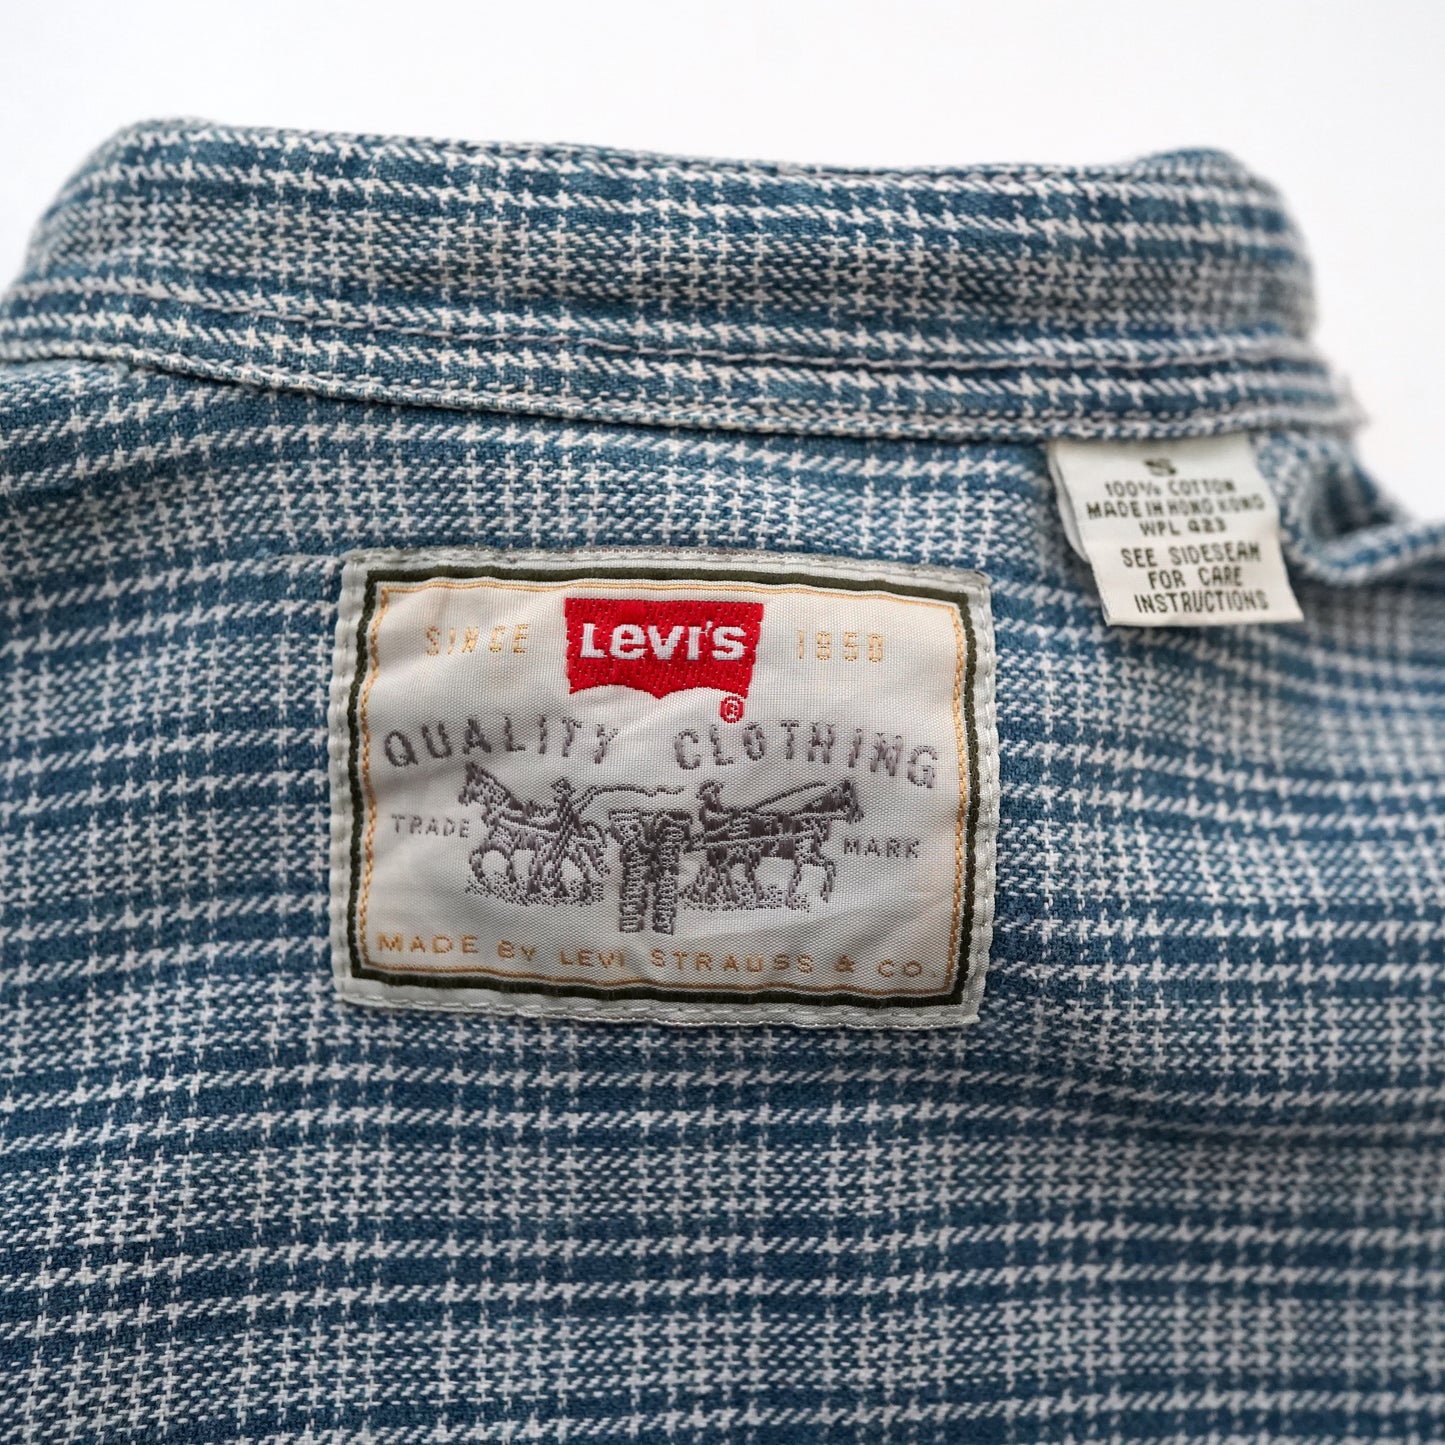 90s Levi’s check shirt